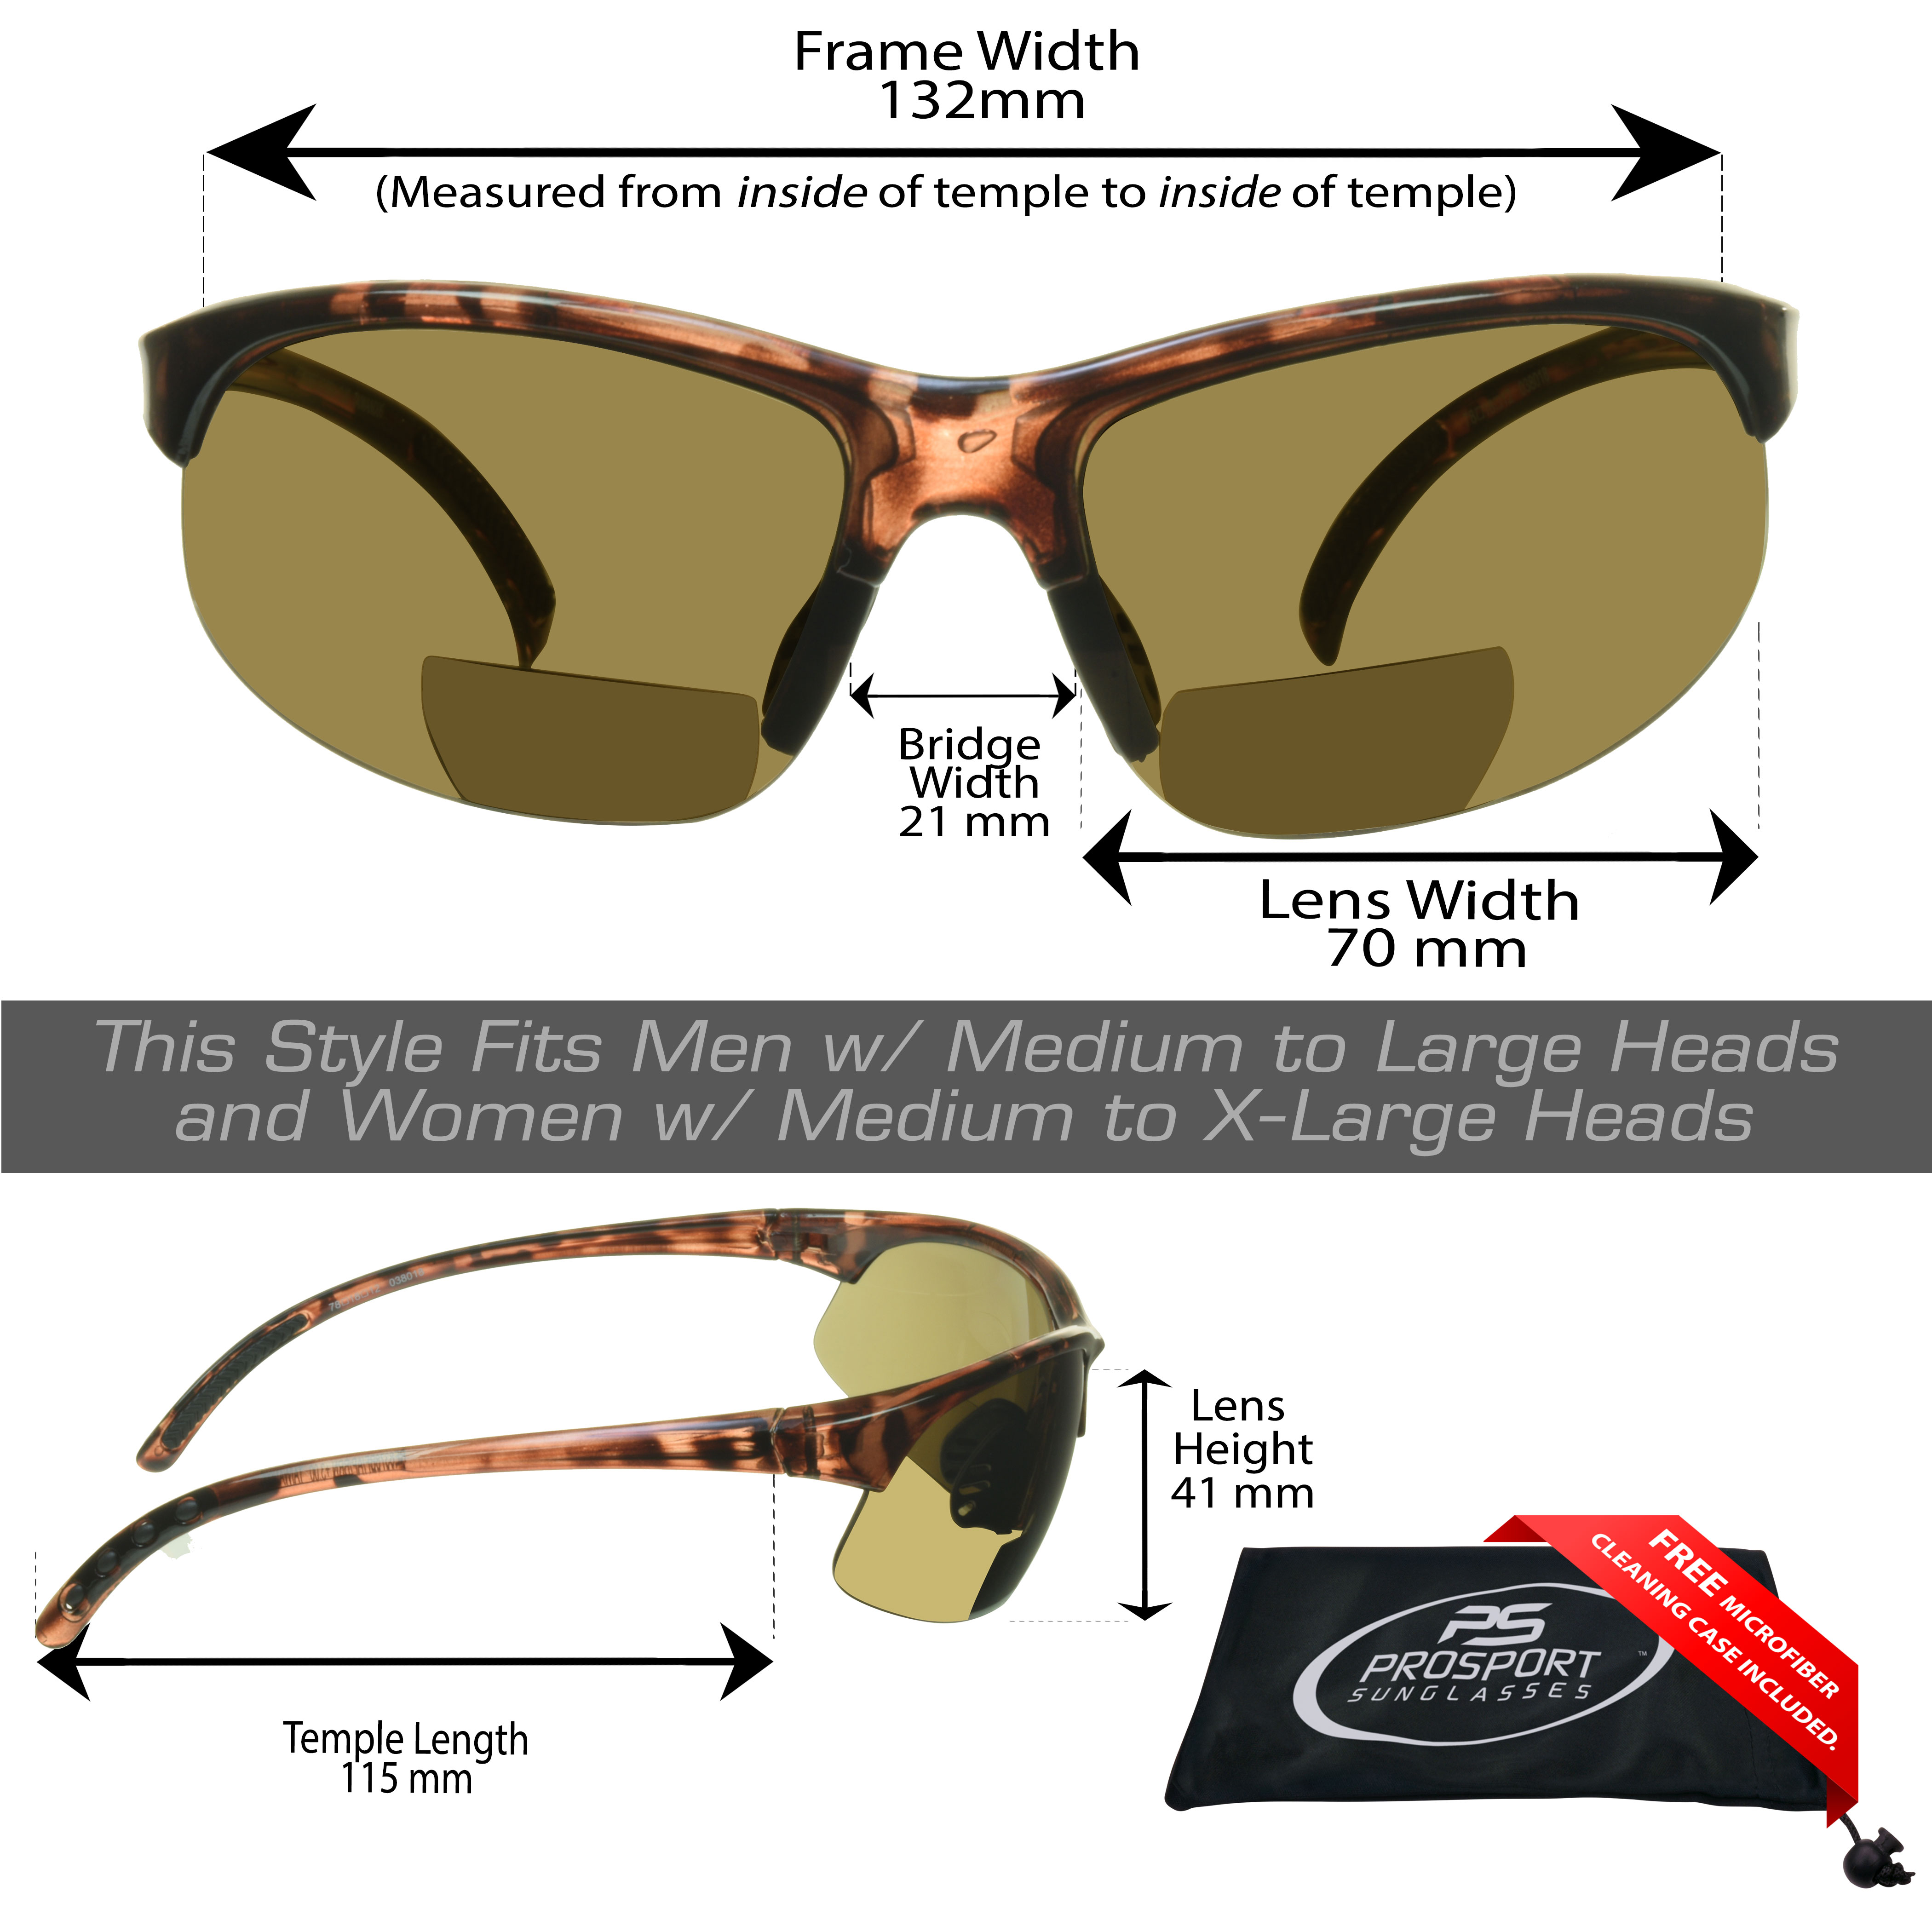 proSPORT Bifocal Reader Sunglasses 1.75 Dark Brown Lens Sport Wrap Polycarbonate Lens Golf Cycling Driving Running Tennis Motorcycle Men Women - image 2 of 5